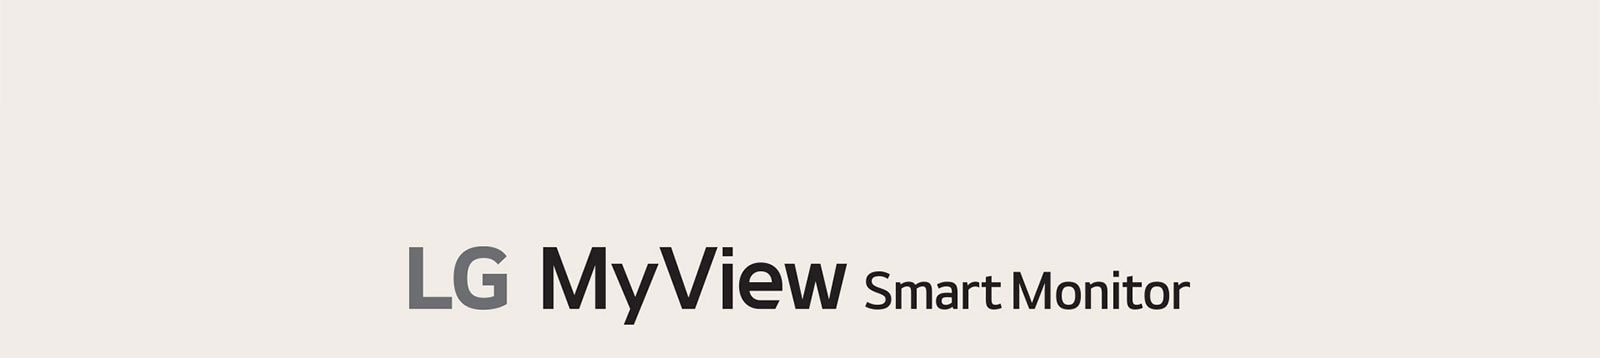 LG MyView Smart Monitor logo.